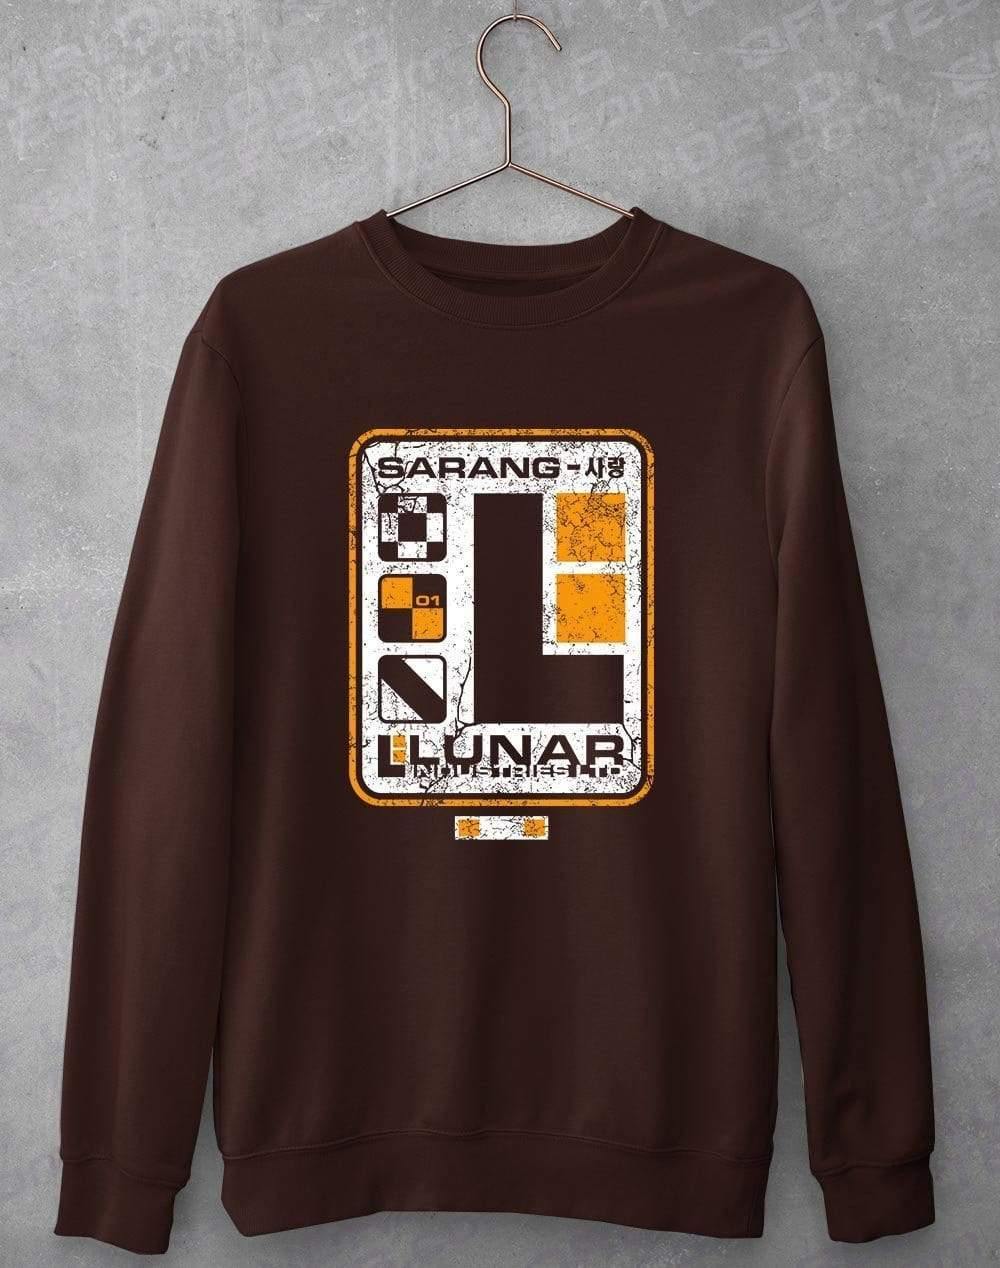 Lunar Industries Sweatshirt S / Chocolate  - Off World Tees